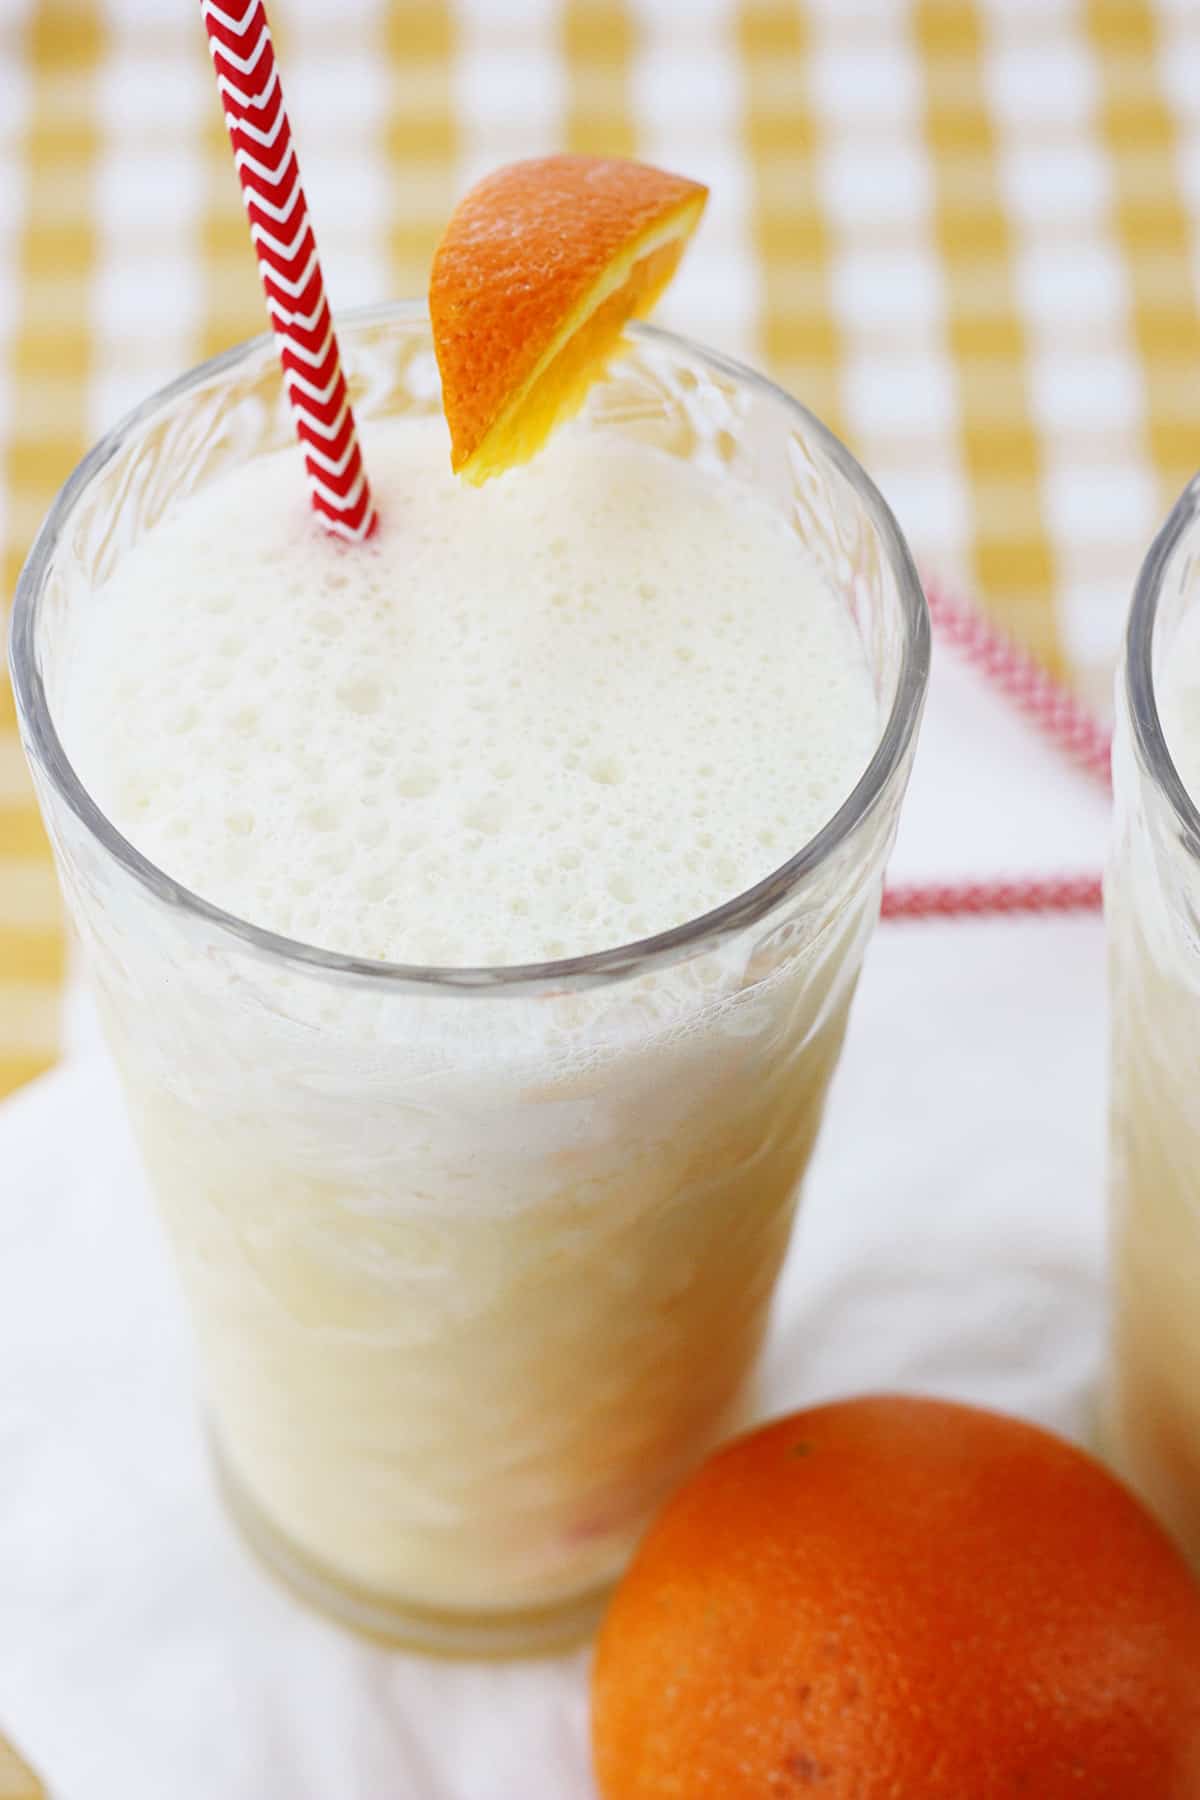 A glass of copycat Orange Julius with a straw and orange slice garnish.